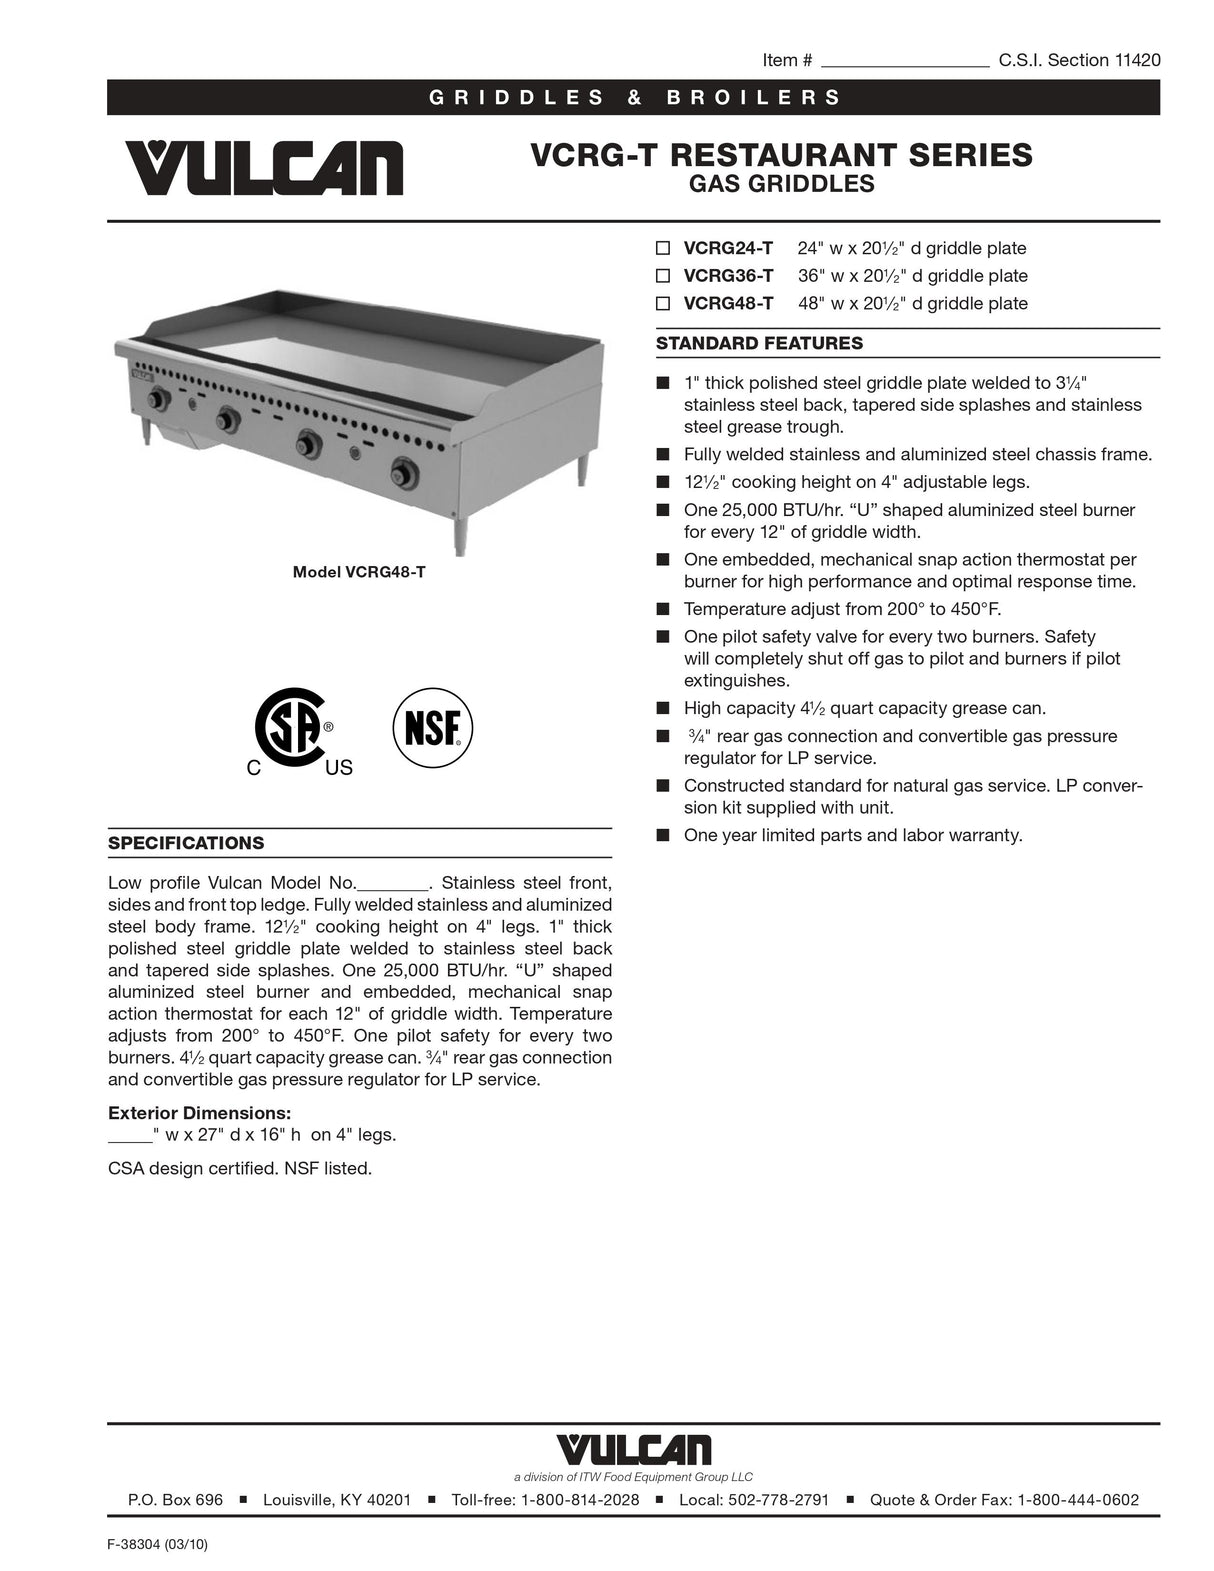 Vulcan Gas Griddle - VCRG24-T